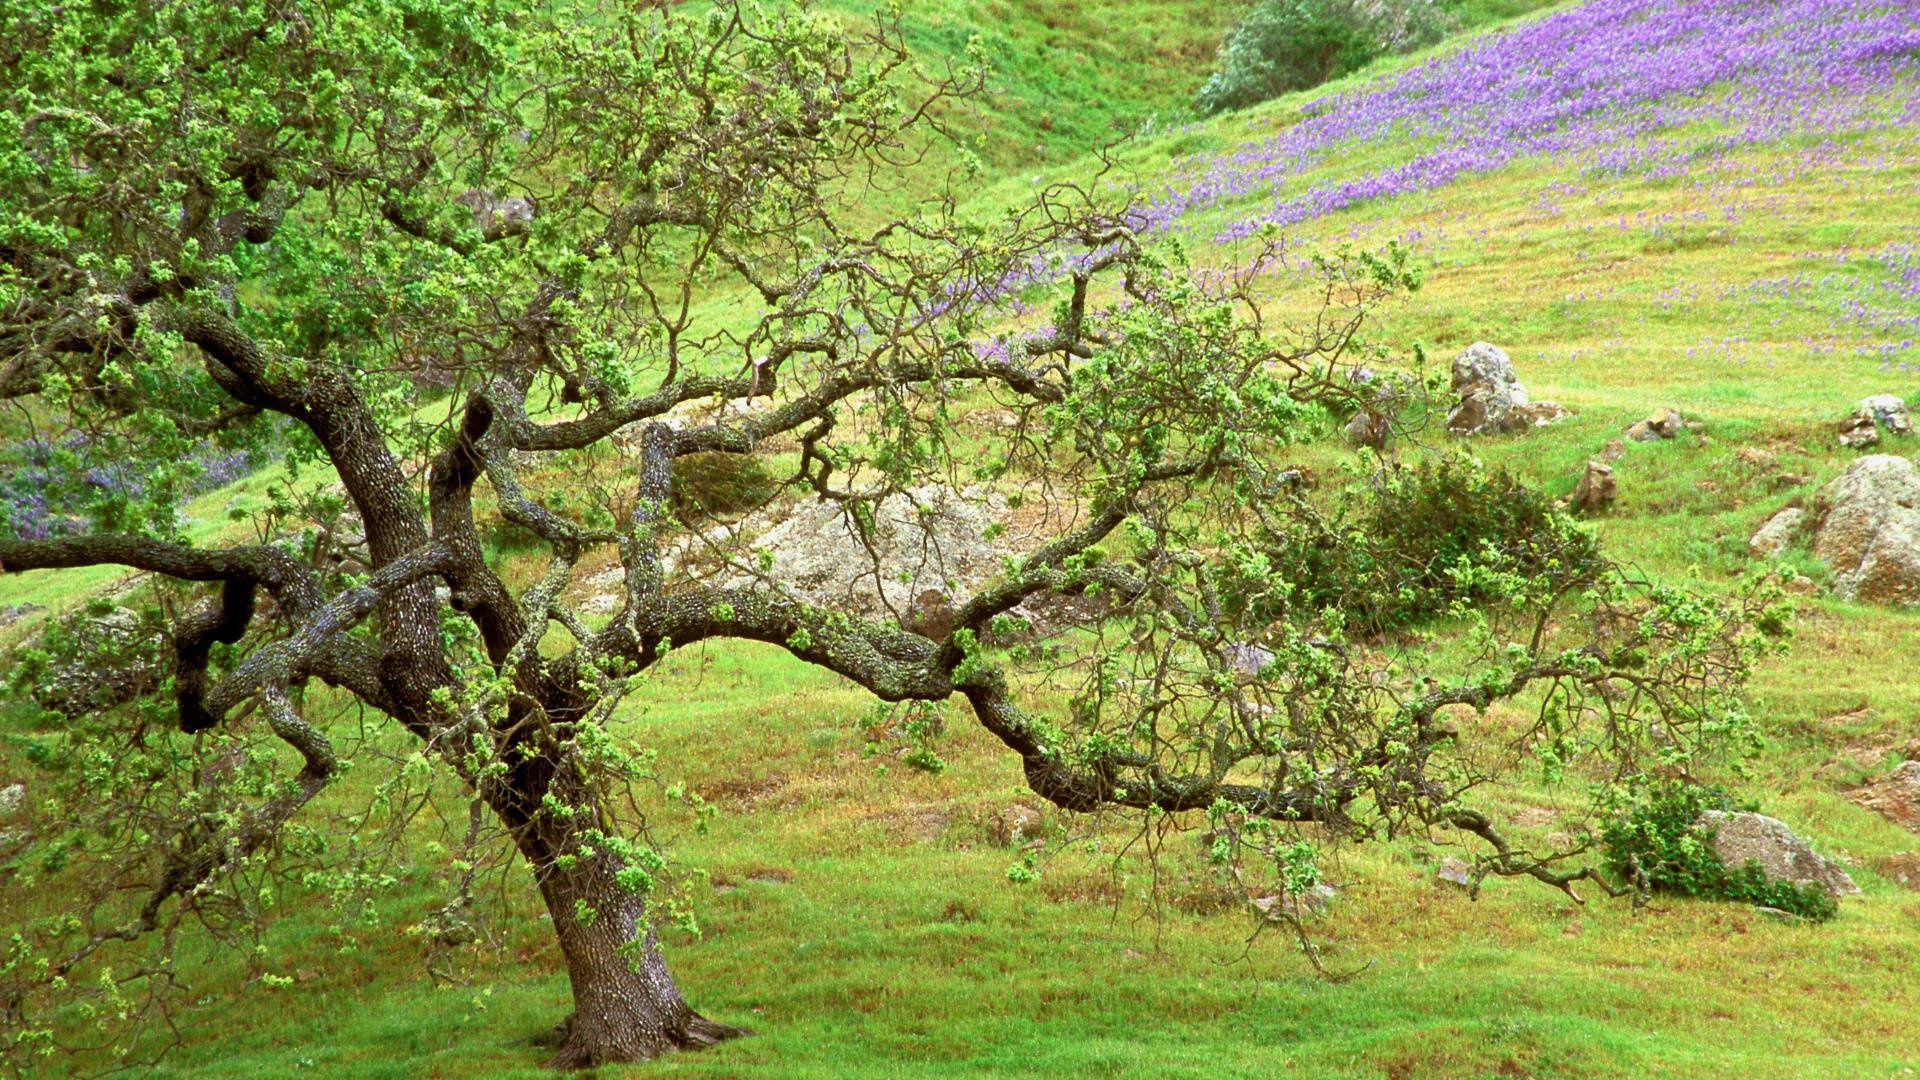 HD oak tree wallpaper, Background image, Nature's serenity, Captivating visuals, 1920x1080 Full HD Desktop